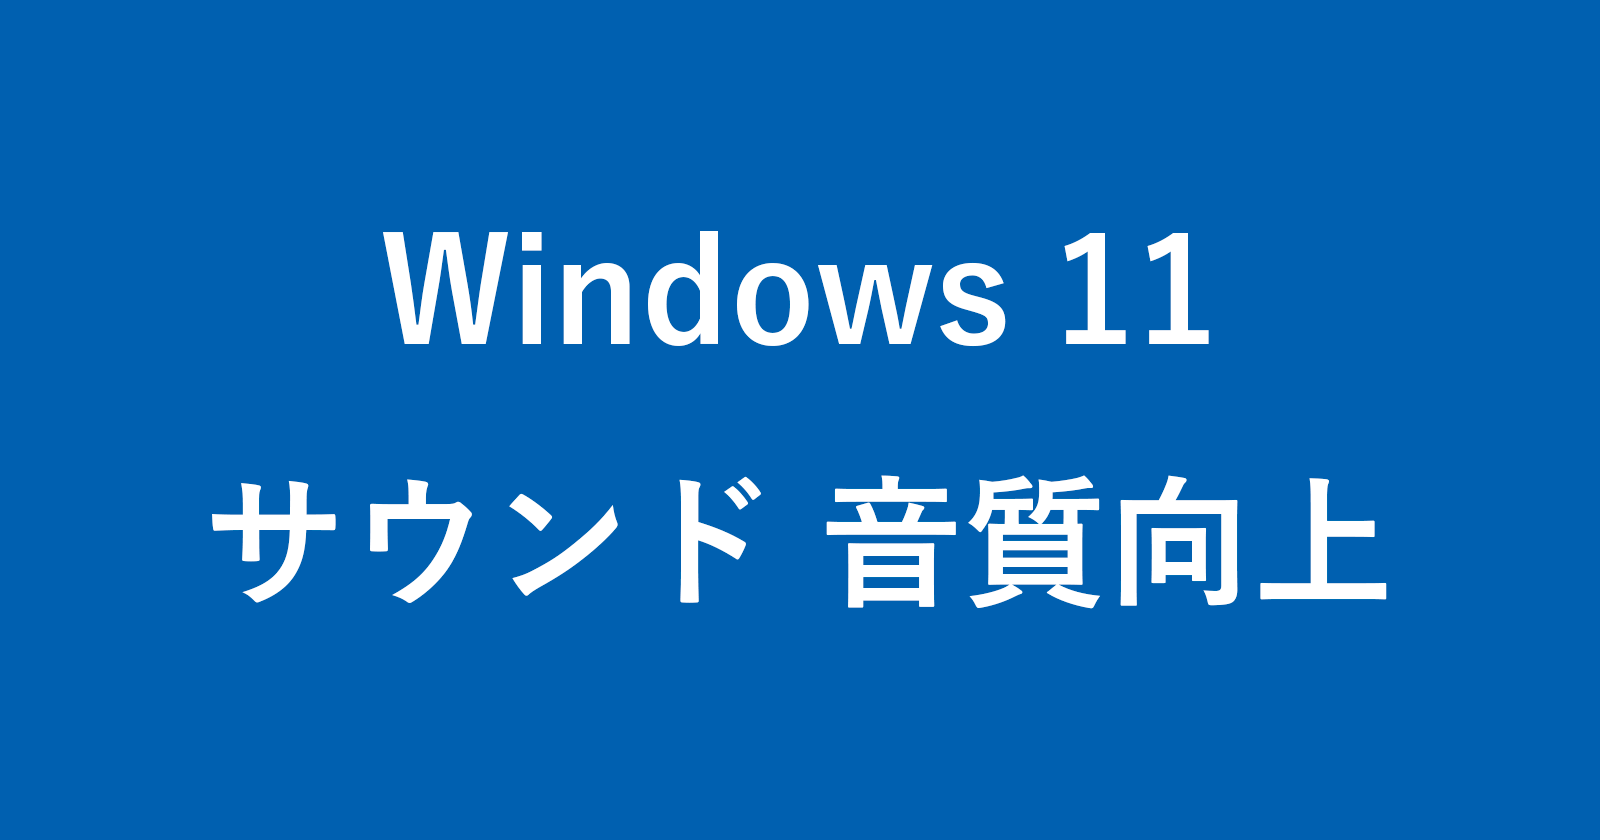 windows 11 enhance audio